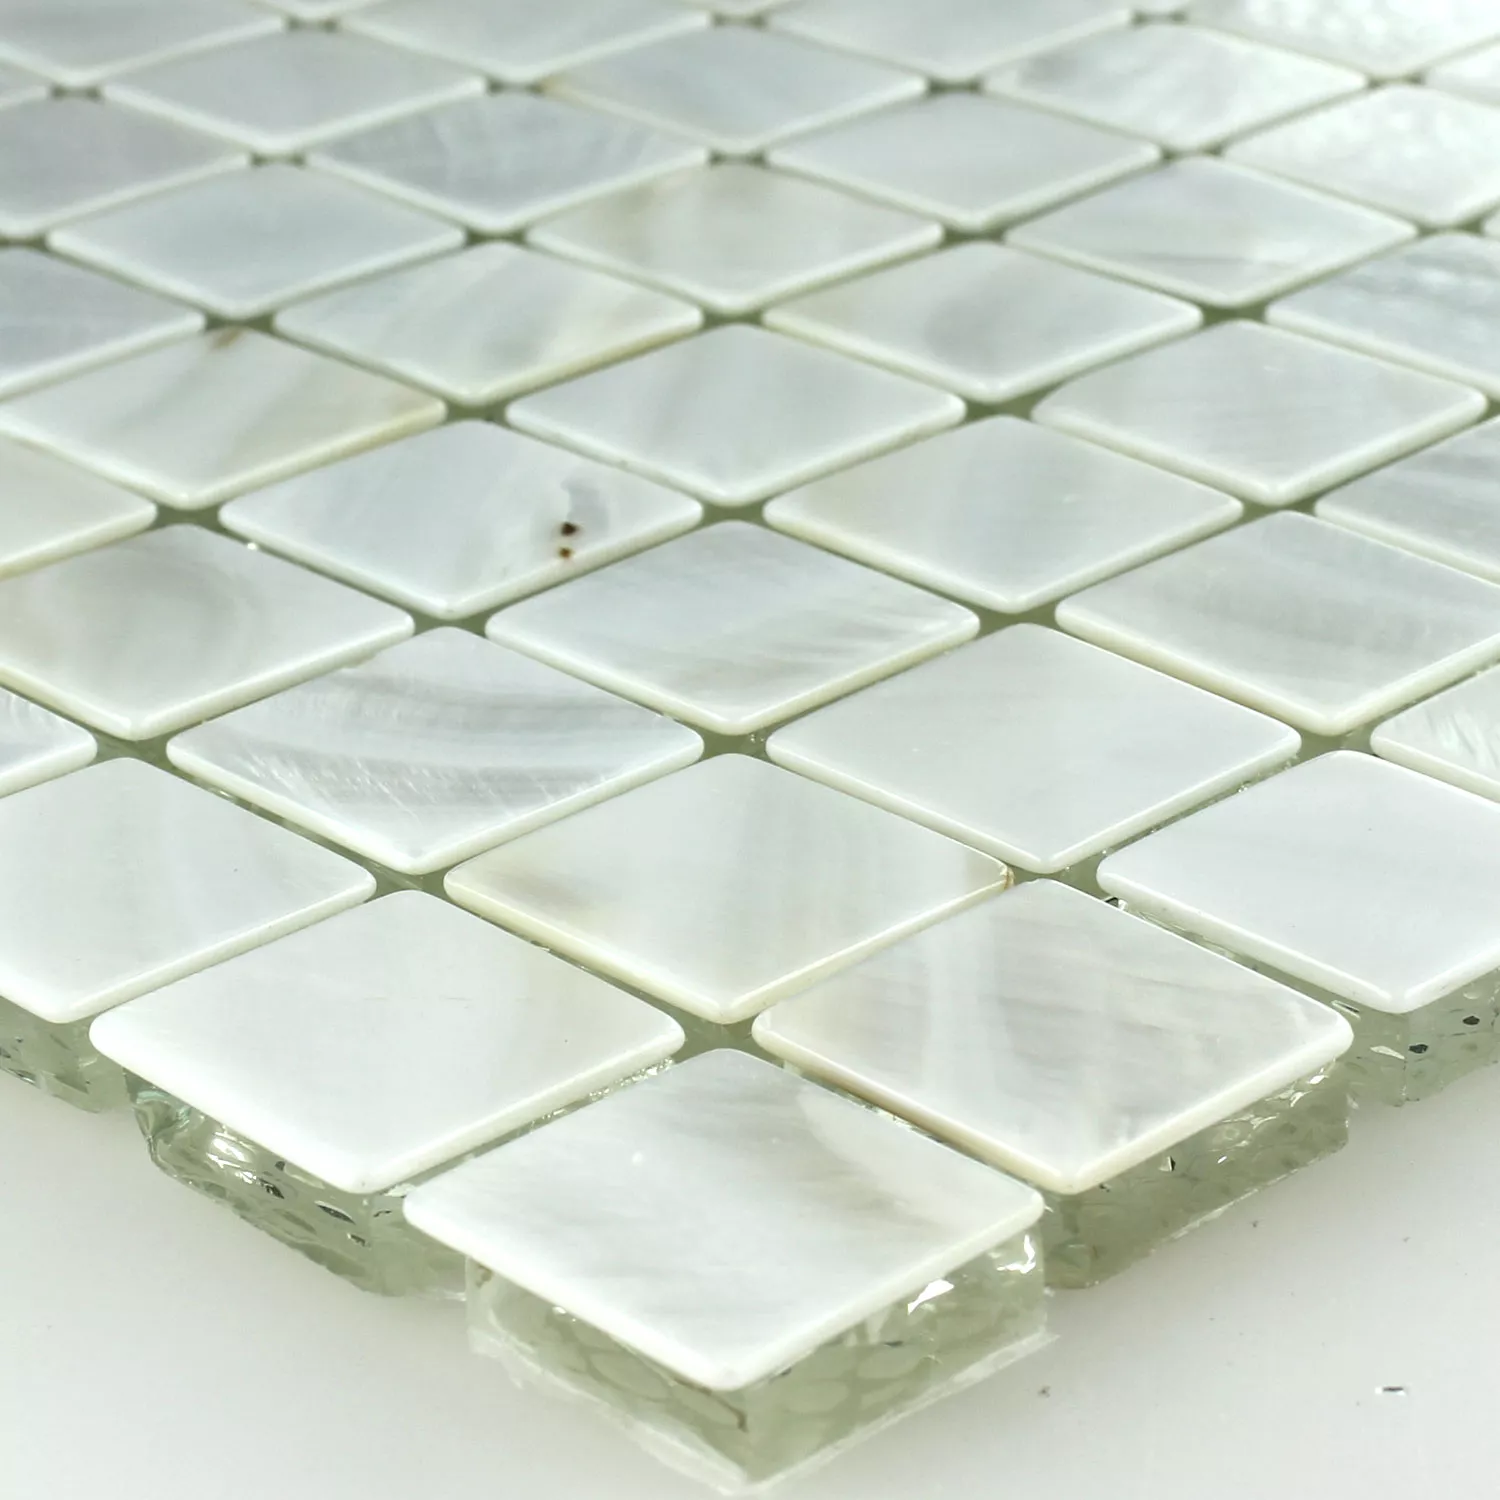 Azulejo Mosaico Vidro Efeito Madrepérola Marfim Branco 23x23x8mm